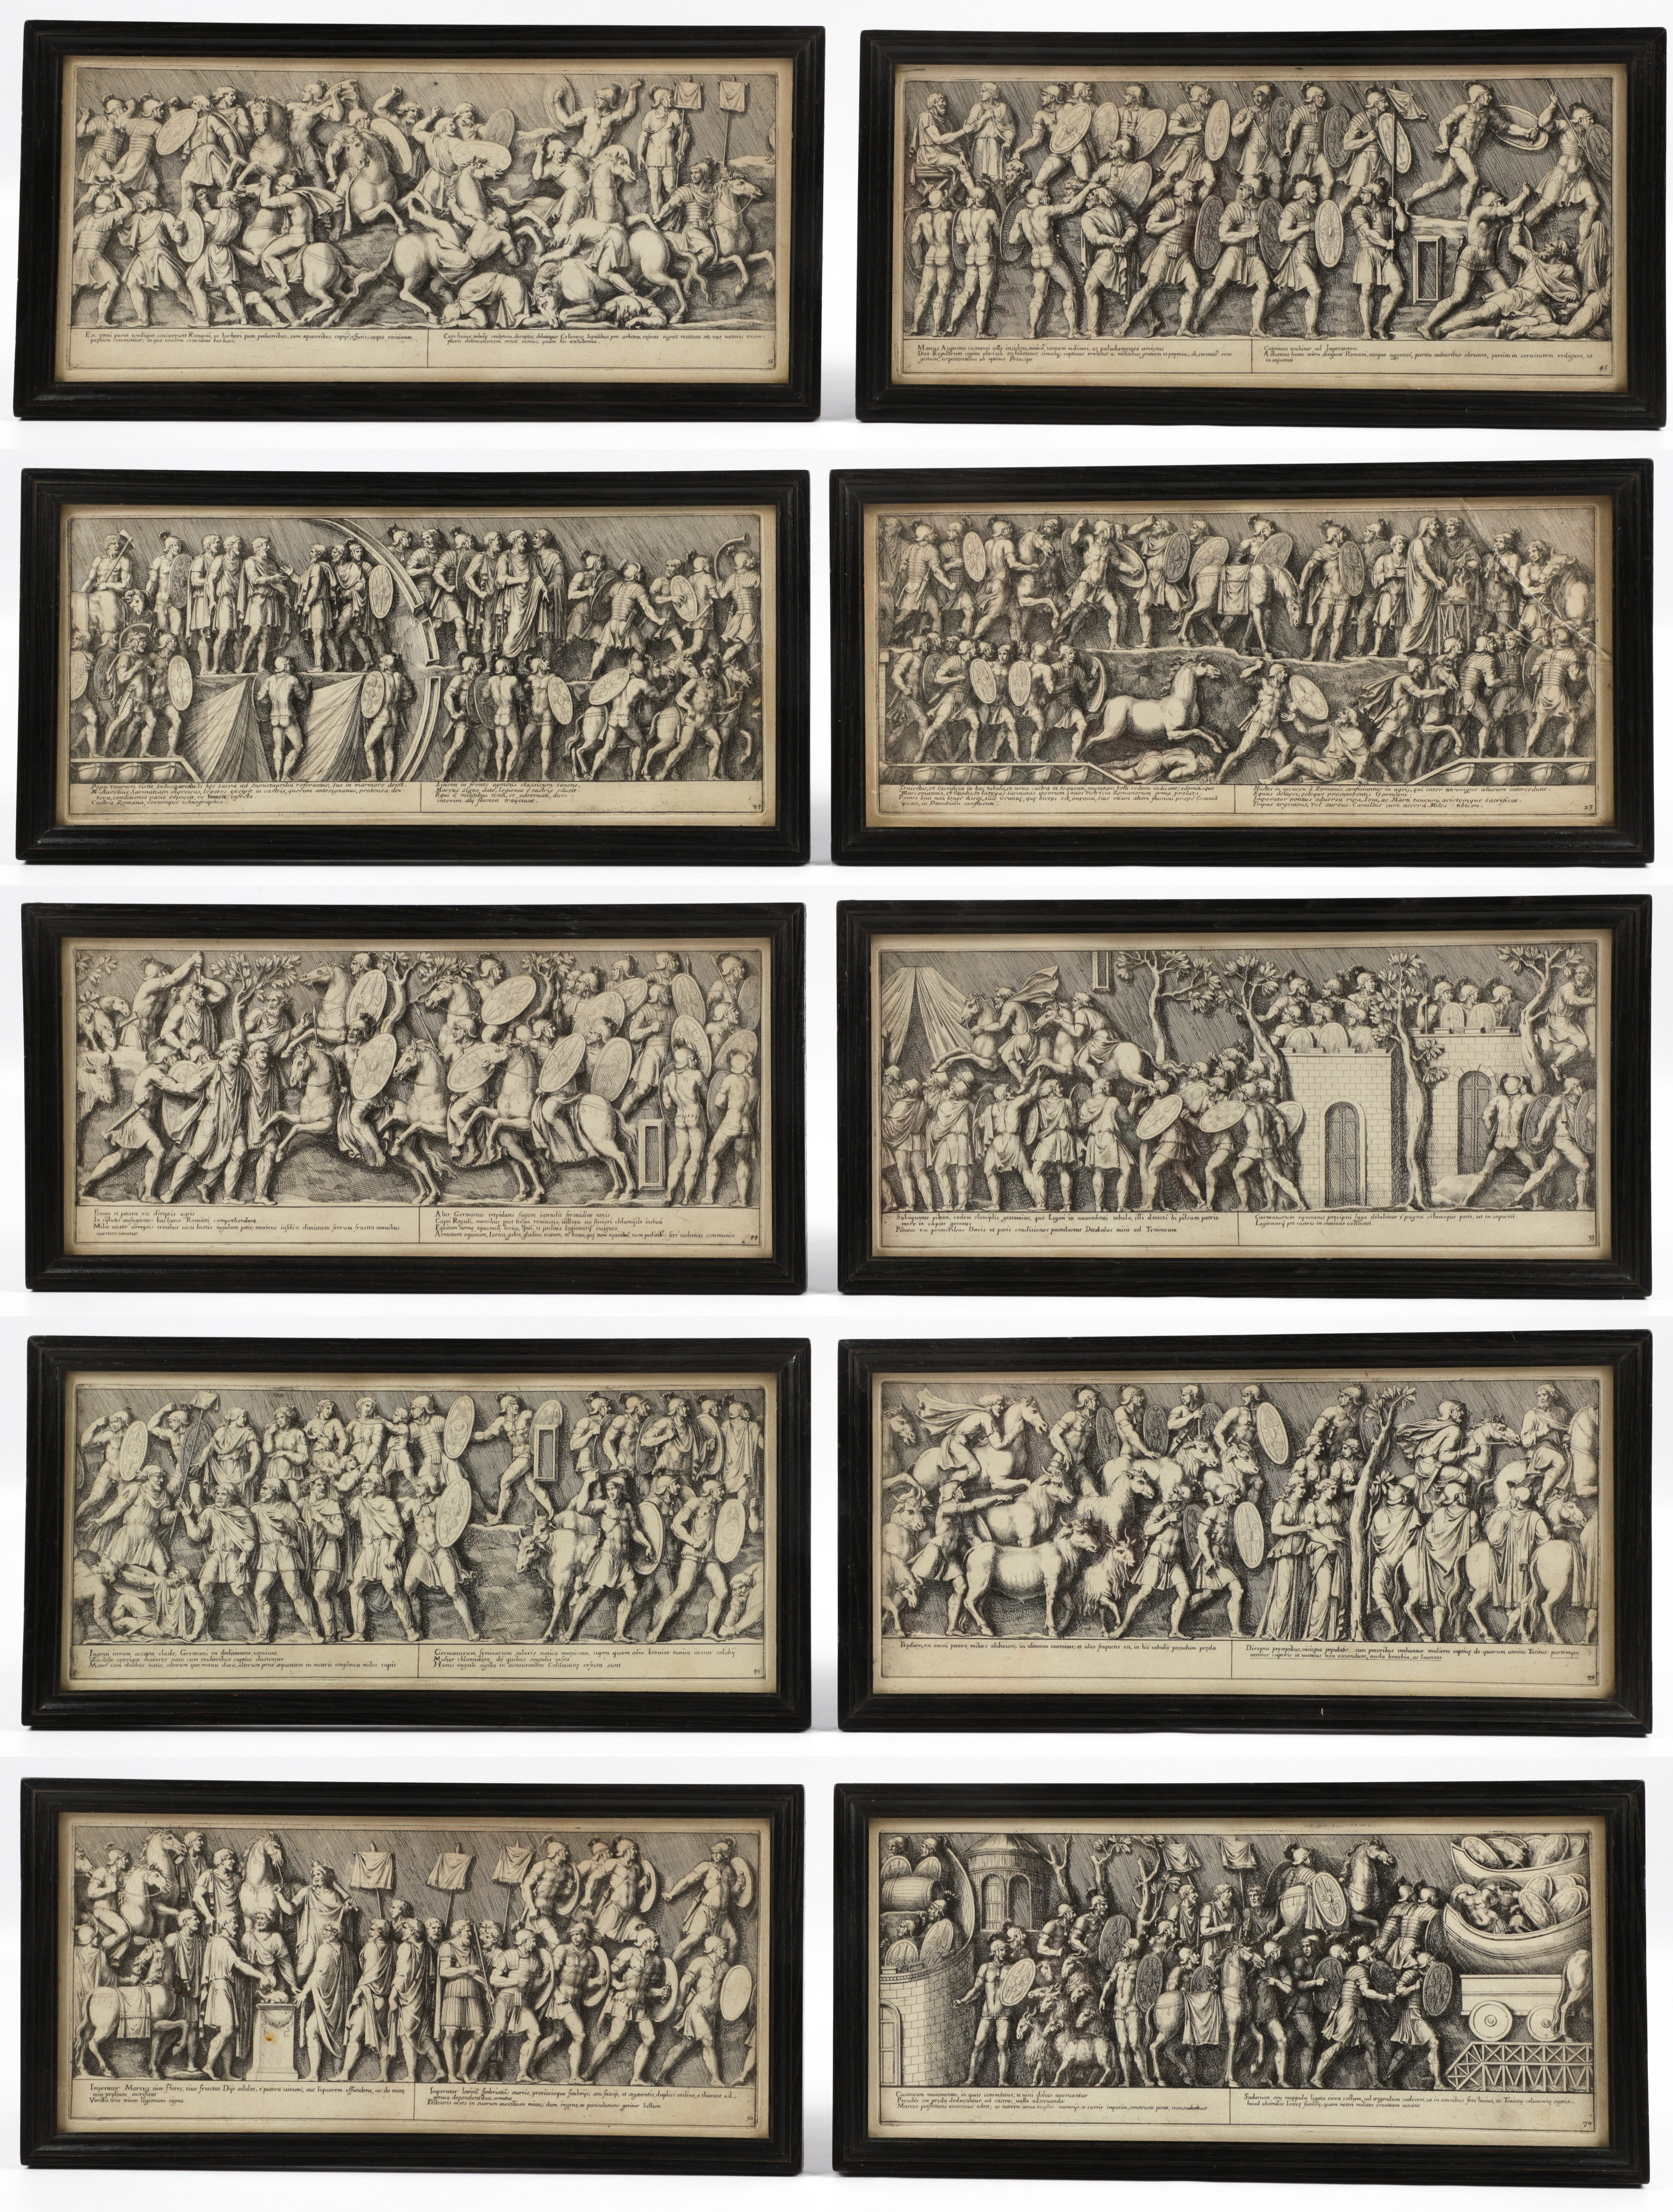  10 Classical Roman soldier engravings  3ca845